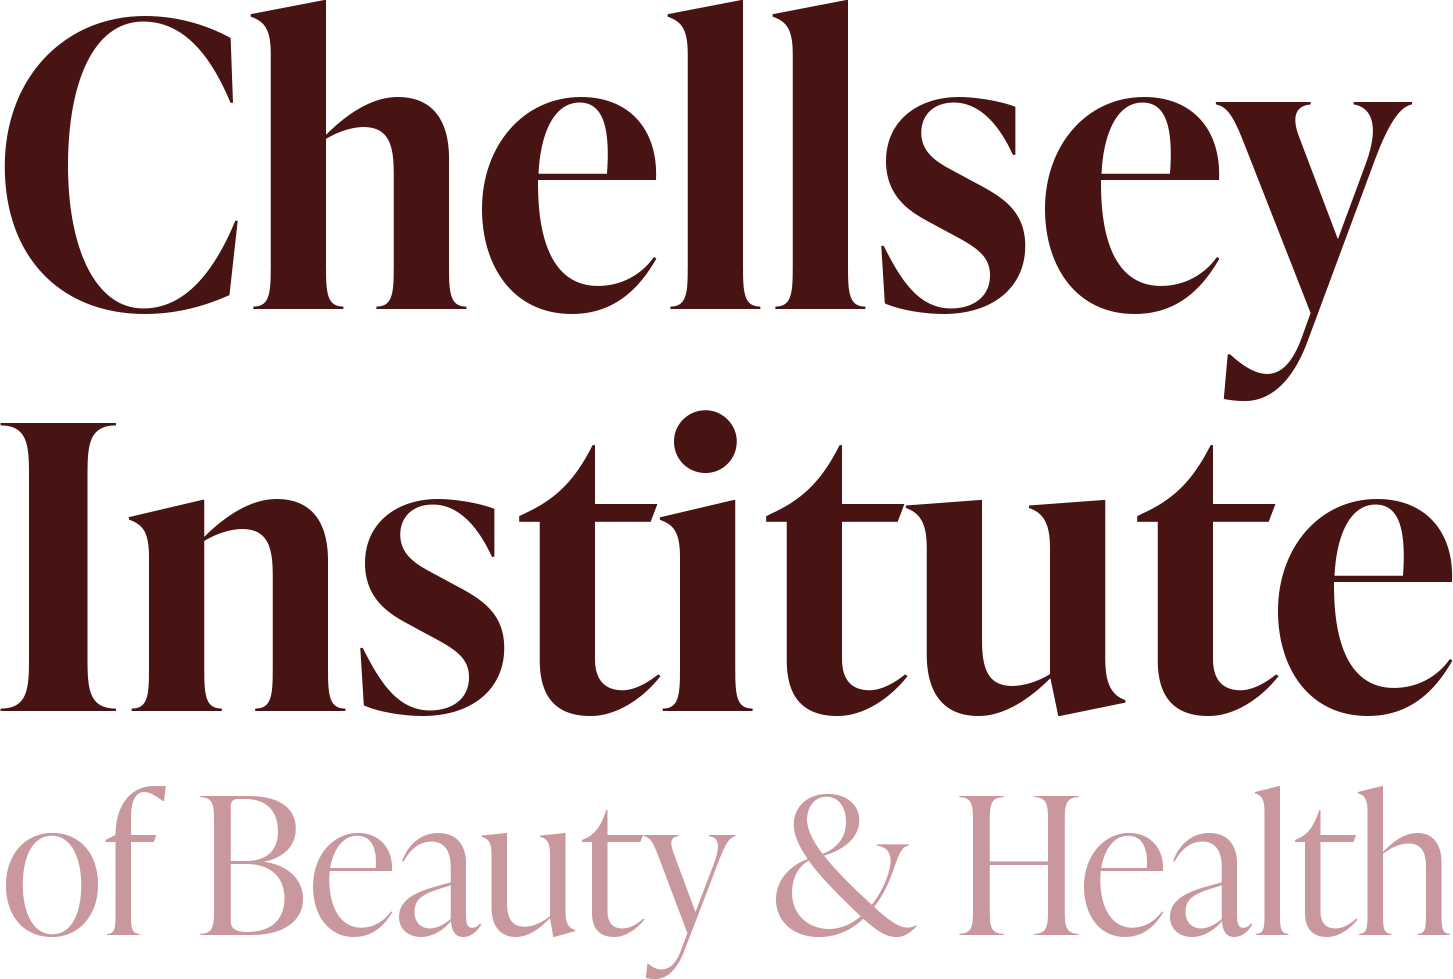 Chellsey Institute